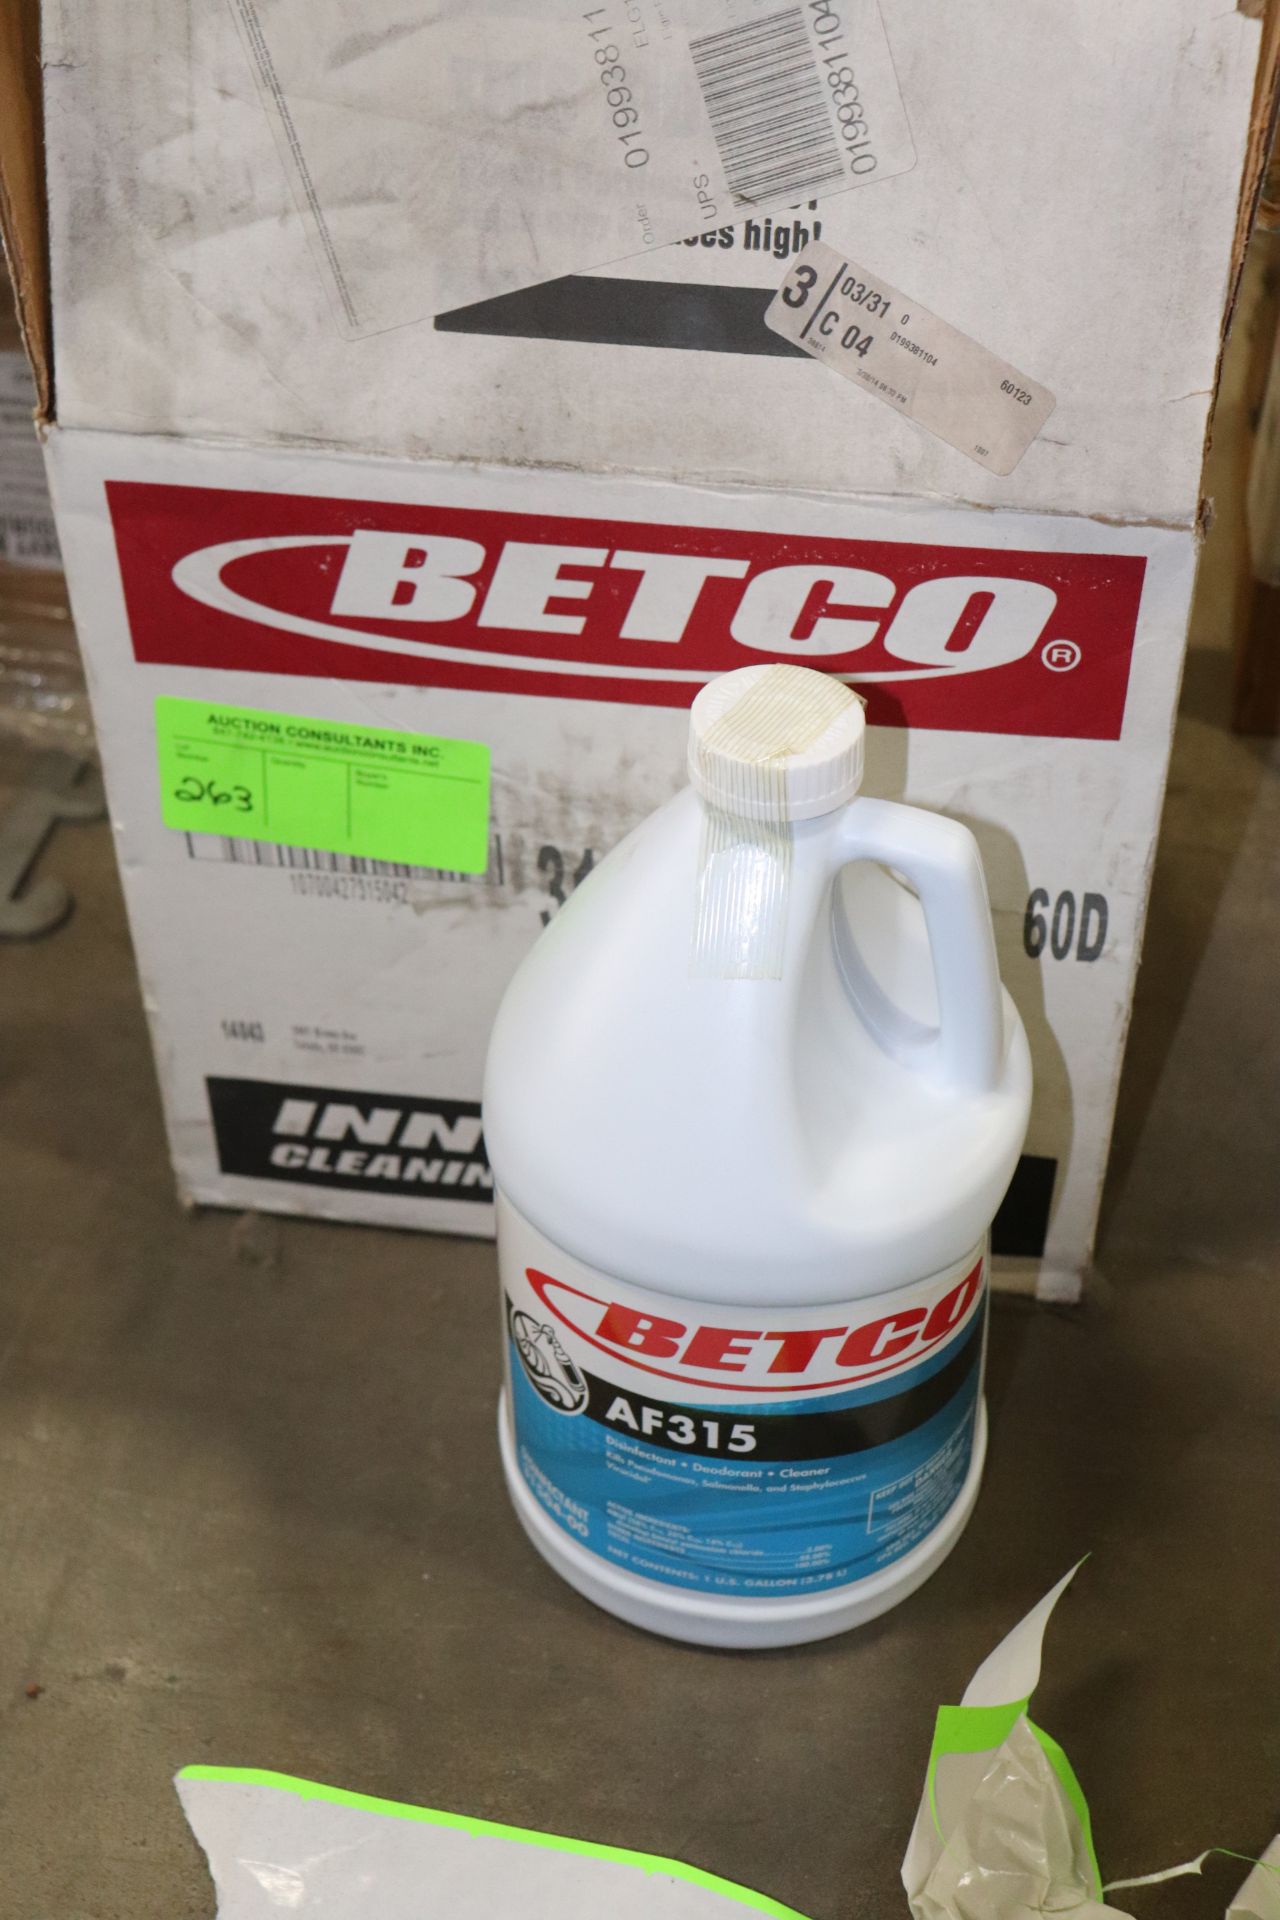 Box of four bottles of Betco disinfectant deodorant cleaner